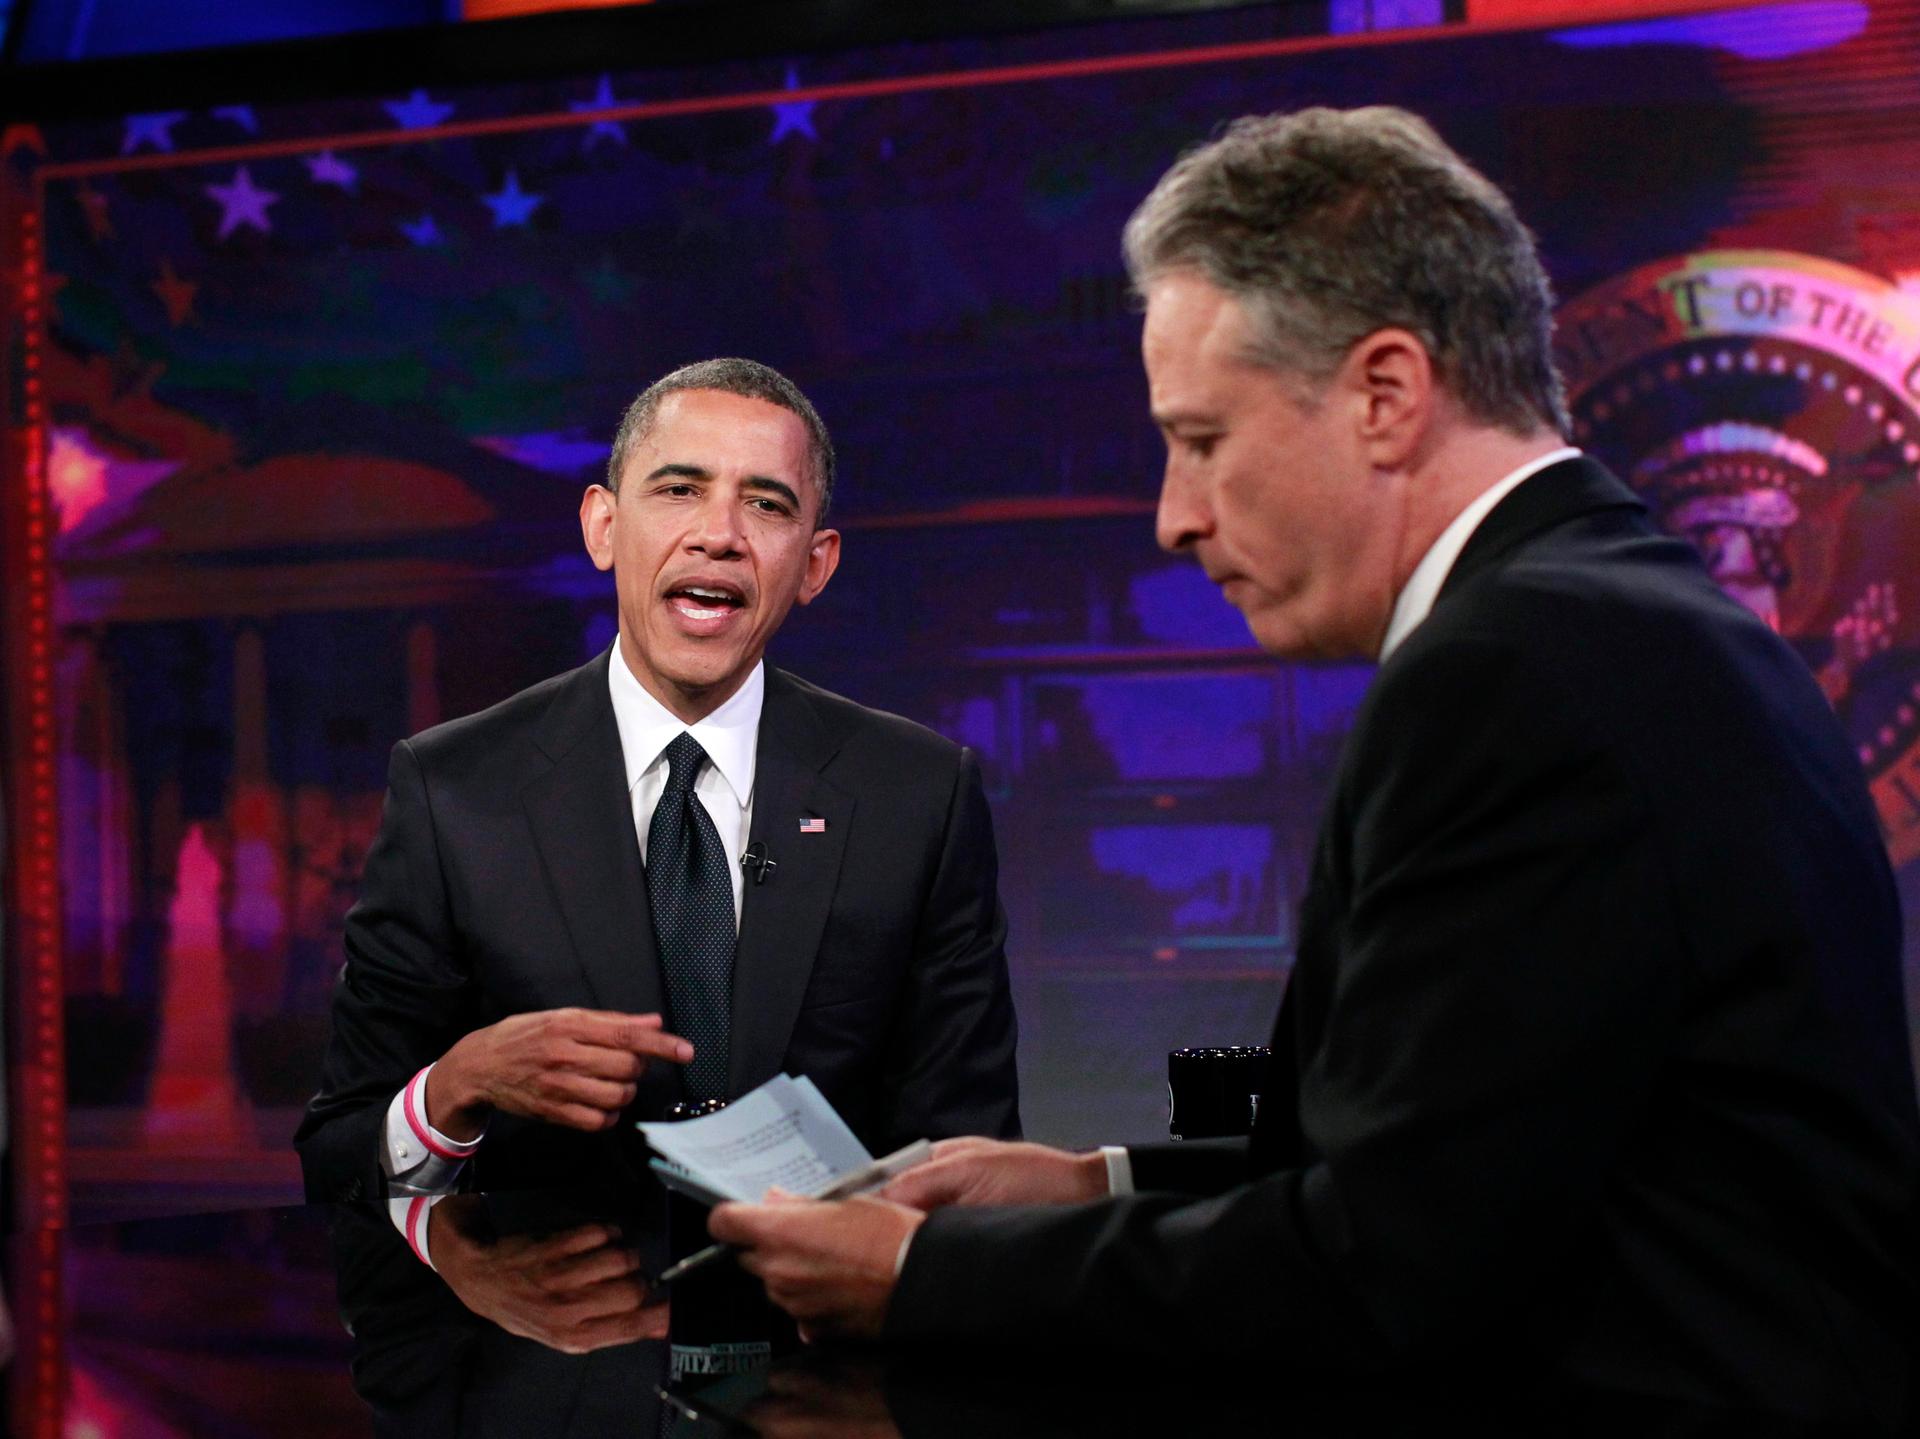 Jon Stewart interviews President Barack Obama in 2012.